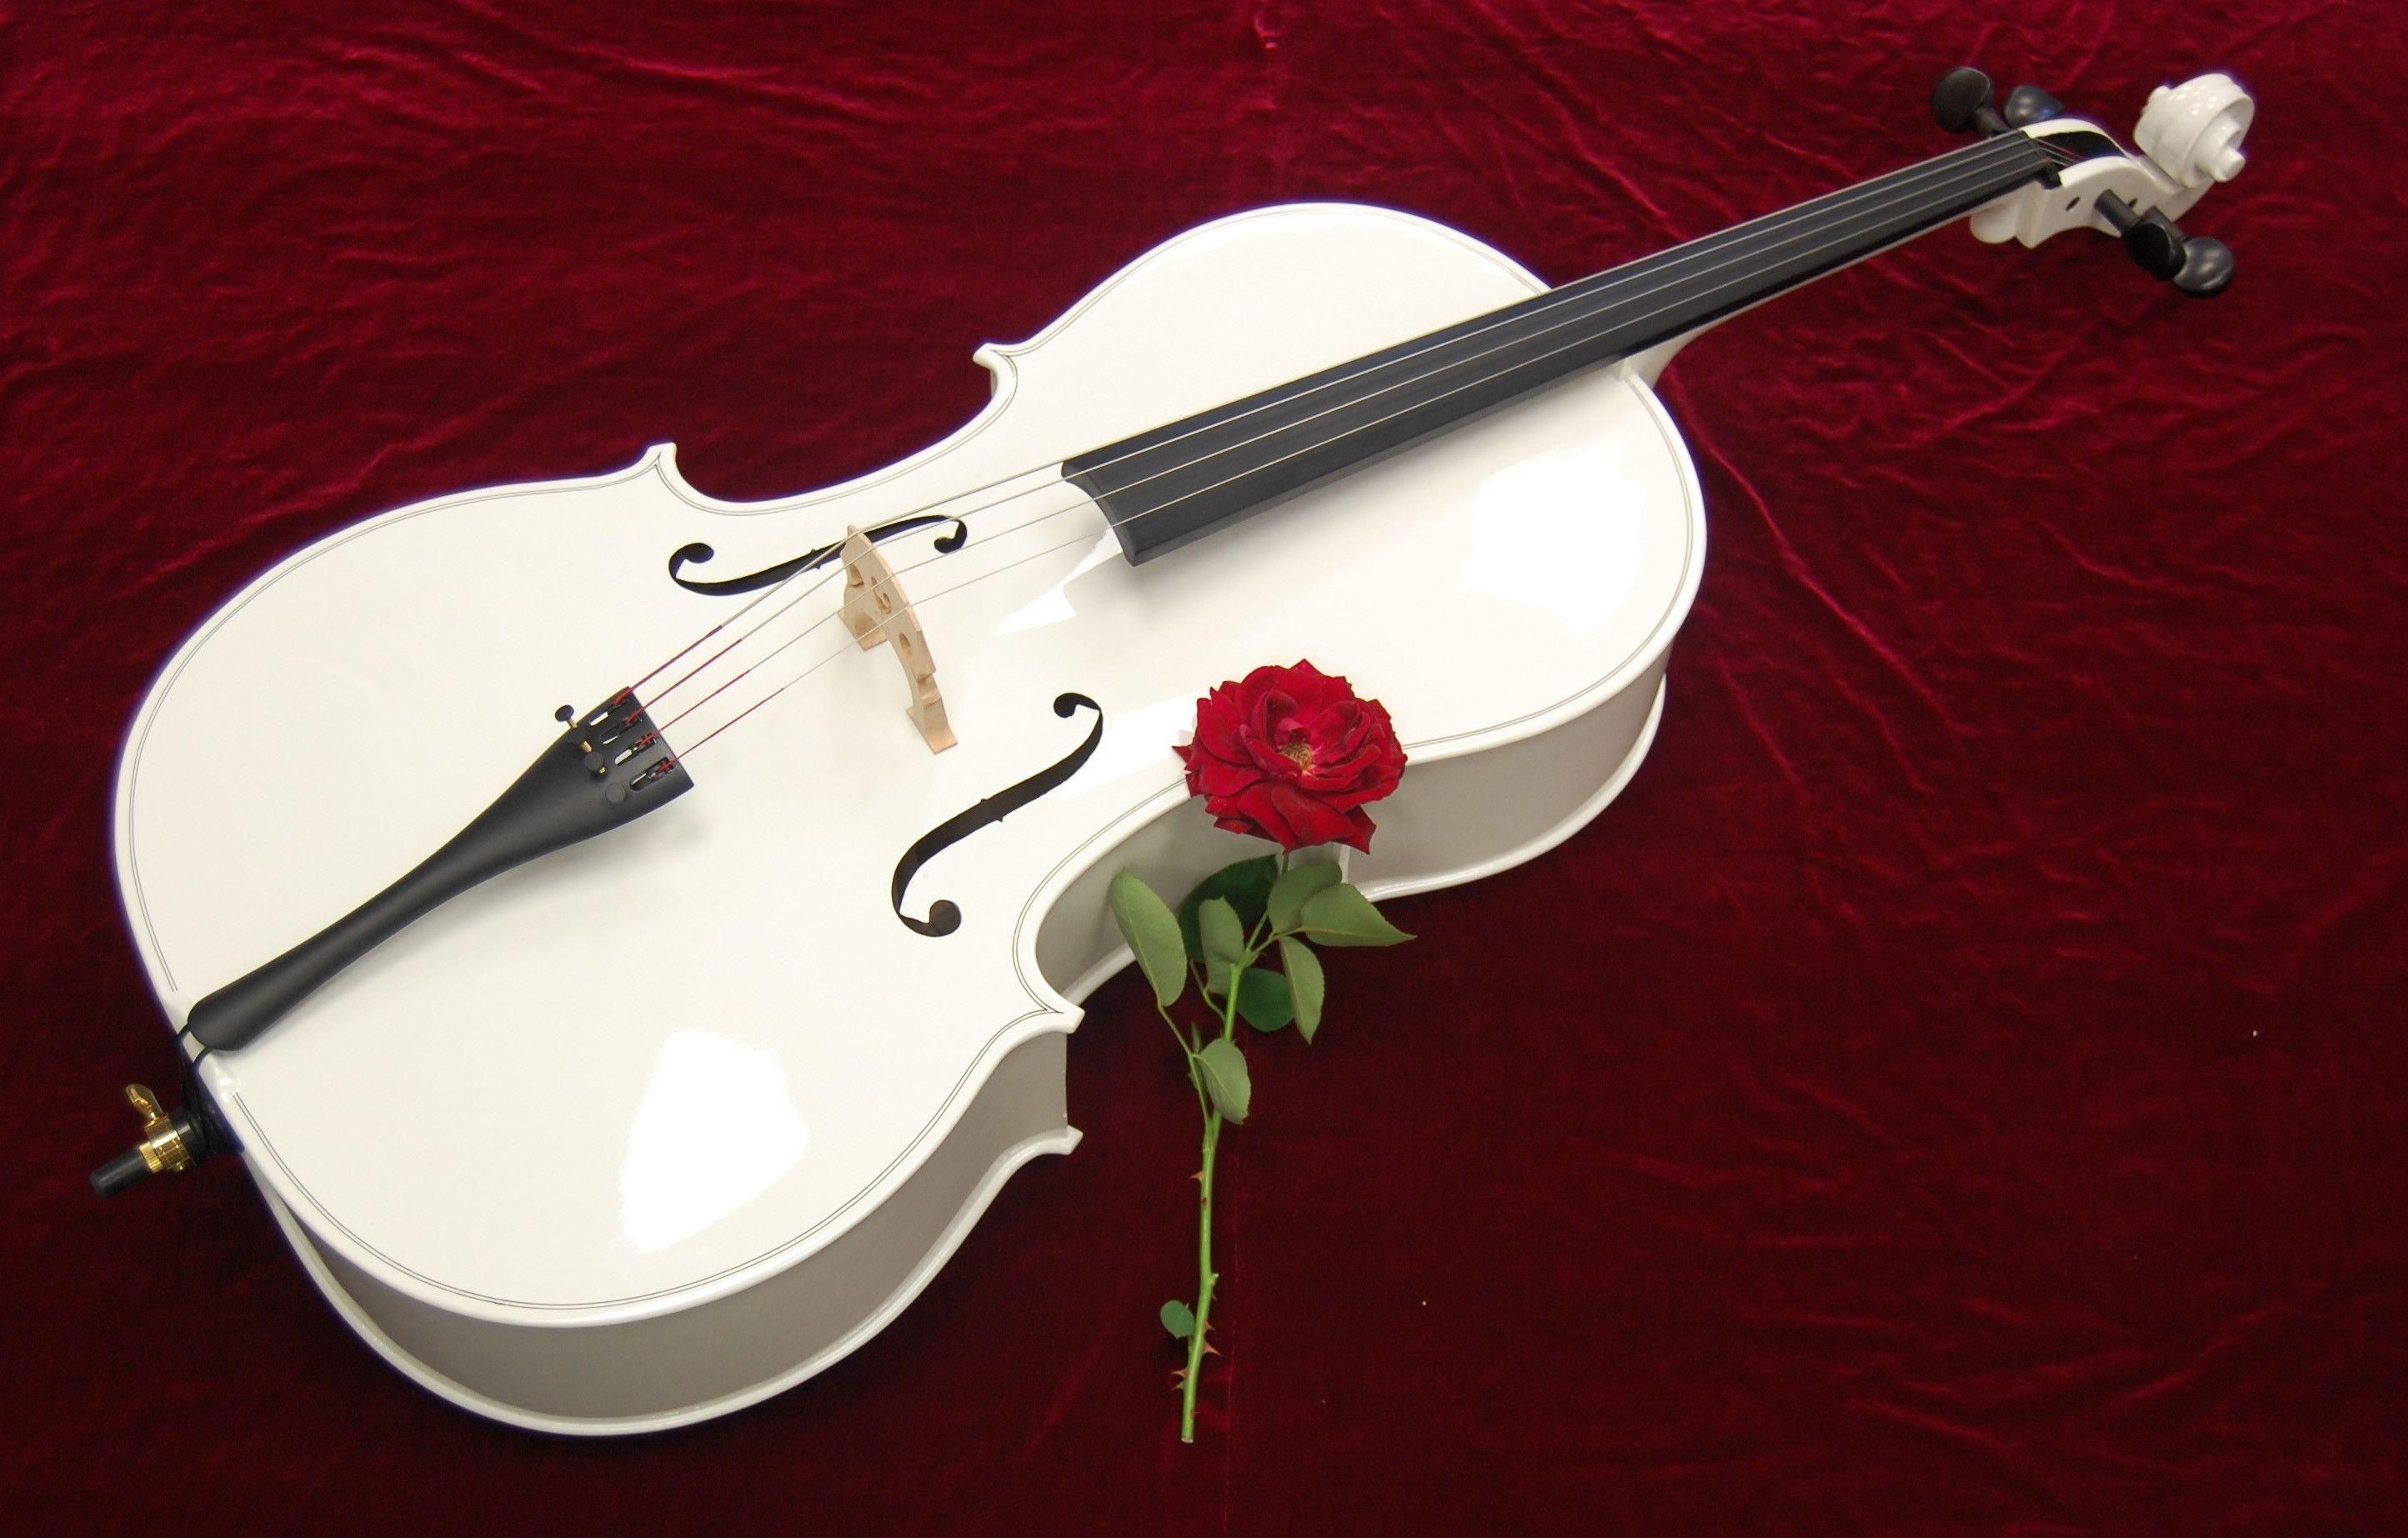 Violoncello: White Cello And Rose, Violists' World Union, Wood String Instrument, Violin Family. 2890x1850 HD Wallpaper.